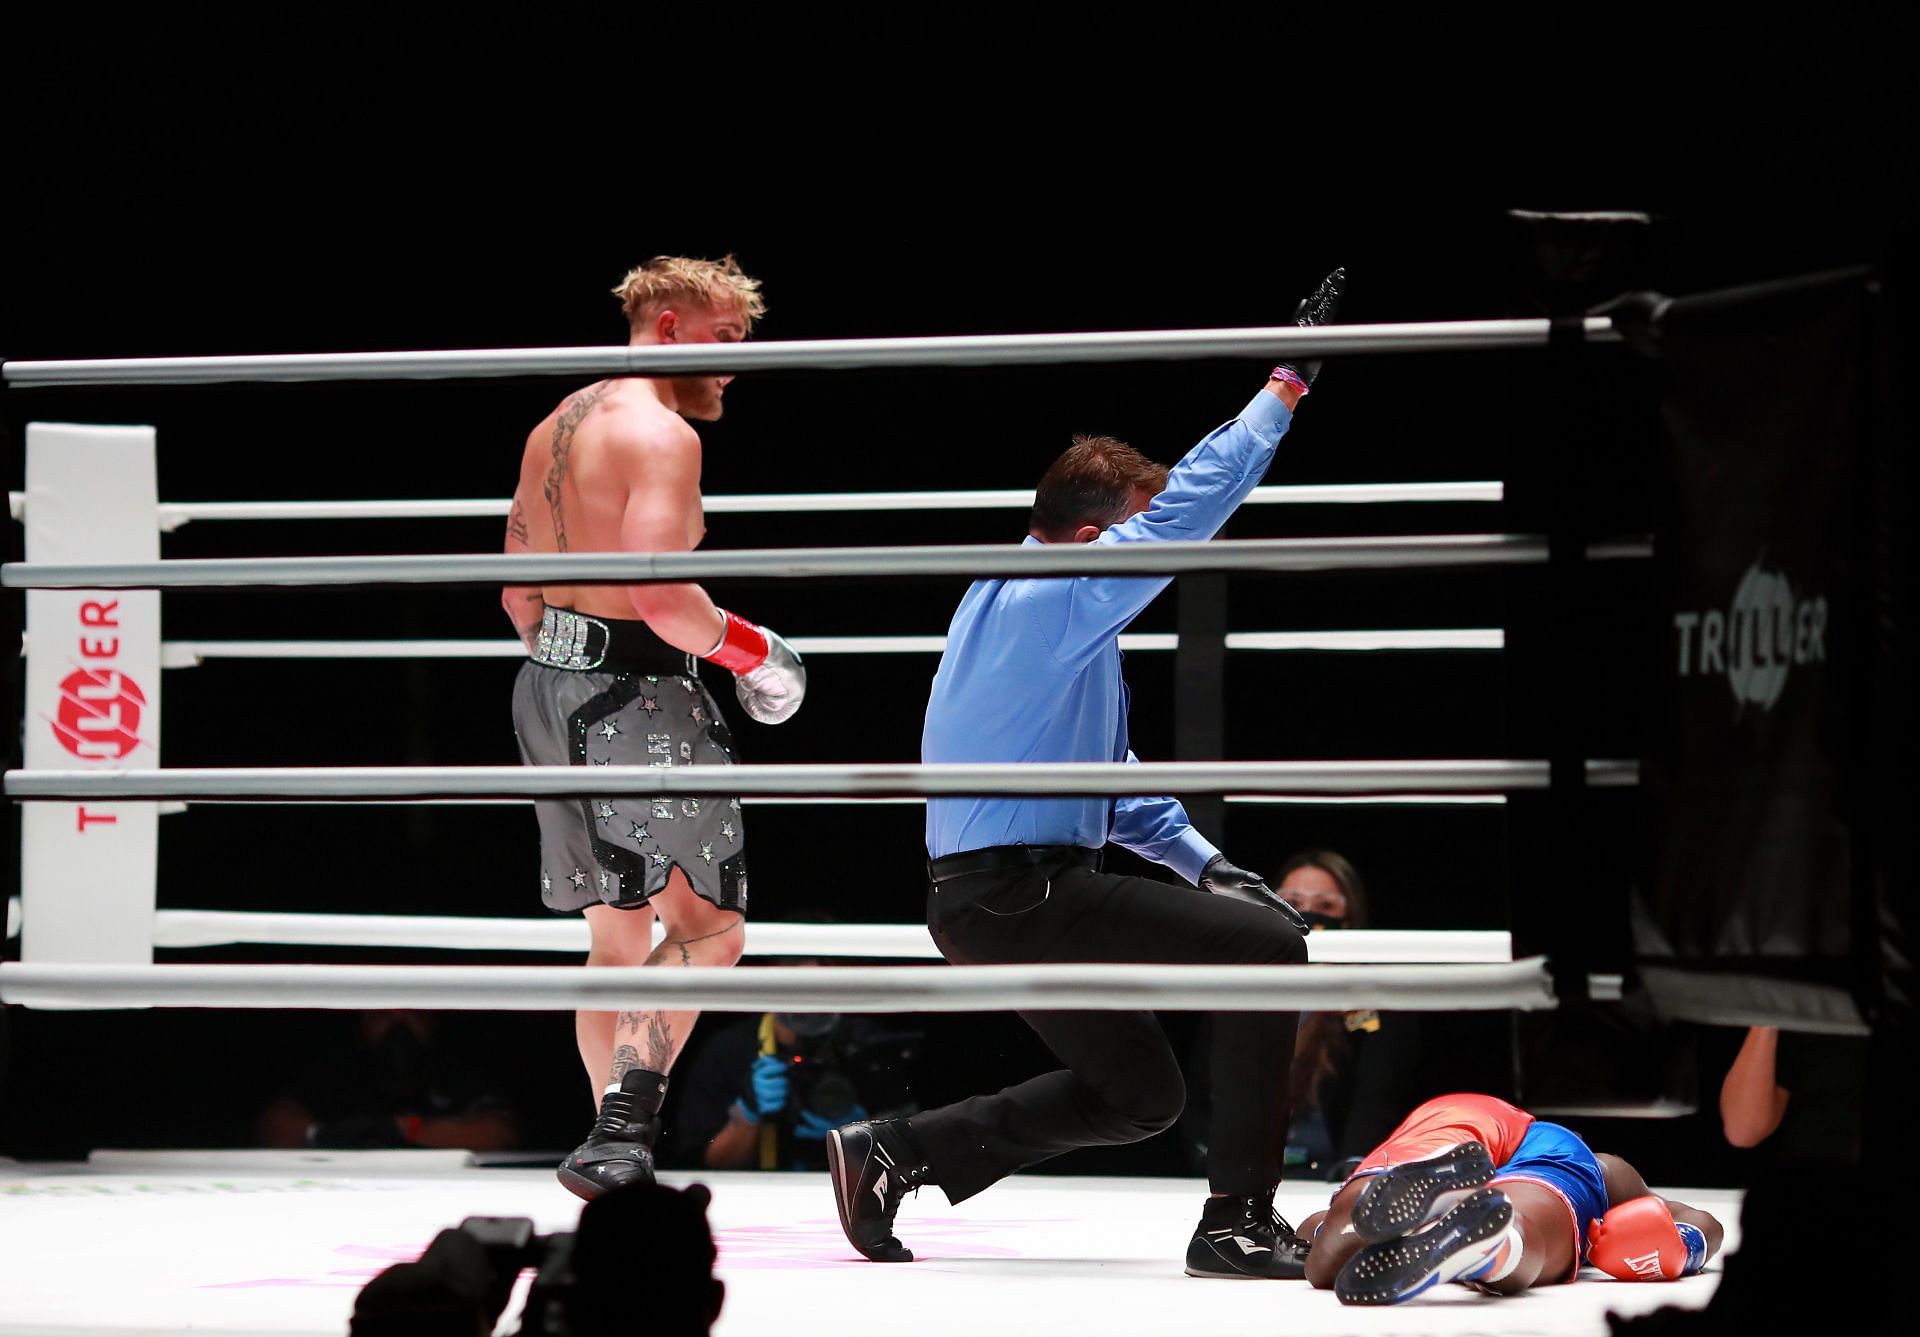 Paul knocks out Robinson at Mike Tyson vs. Roy Jones Jr.